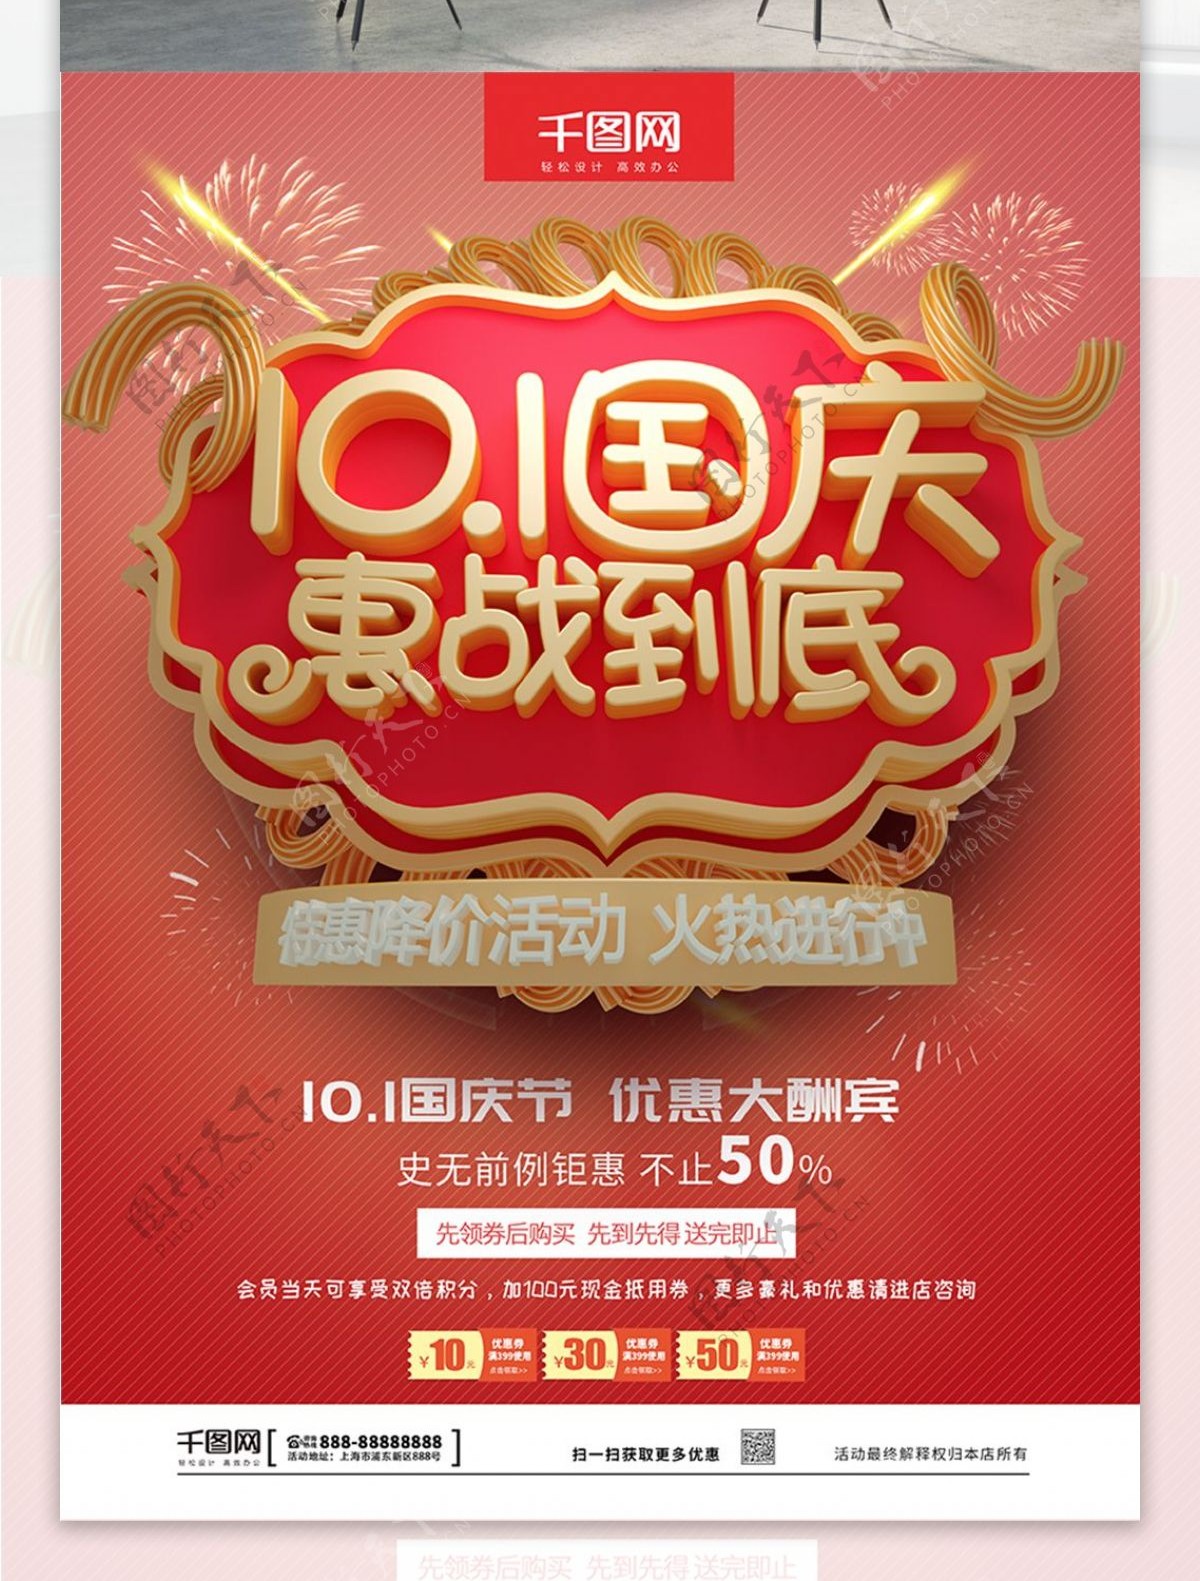 C4D红色10.1国庆惠战到底促销海报